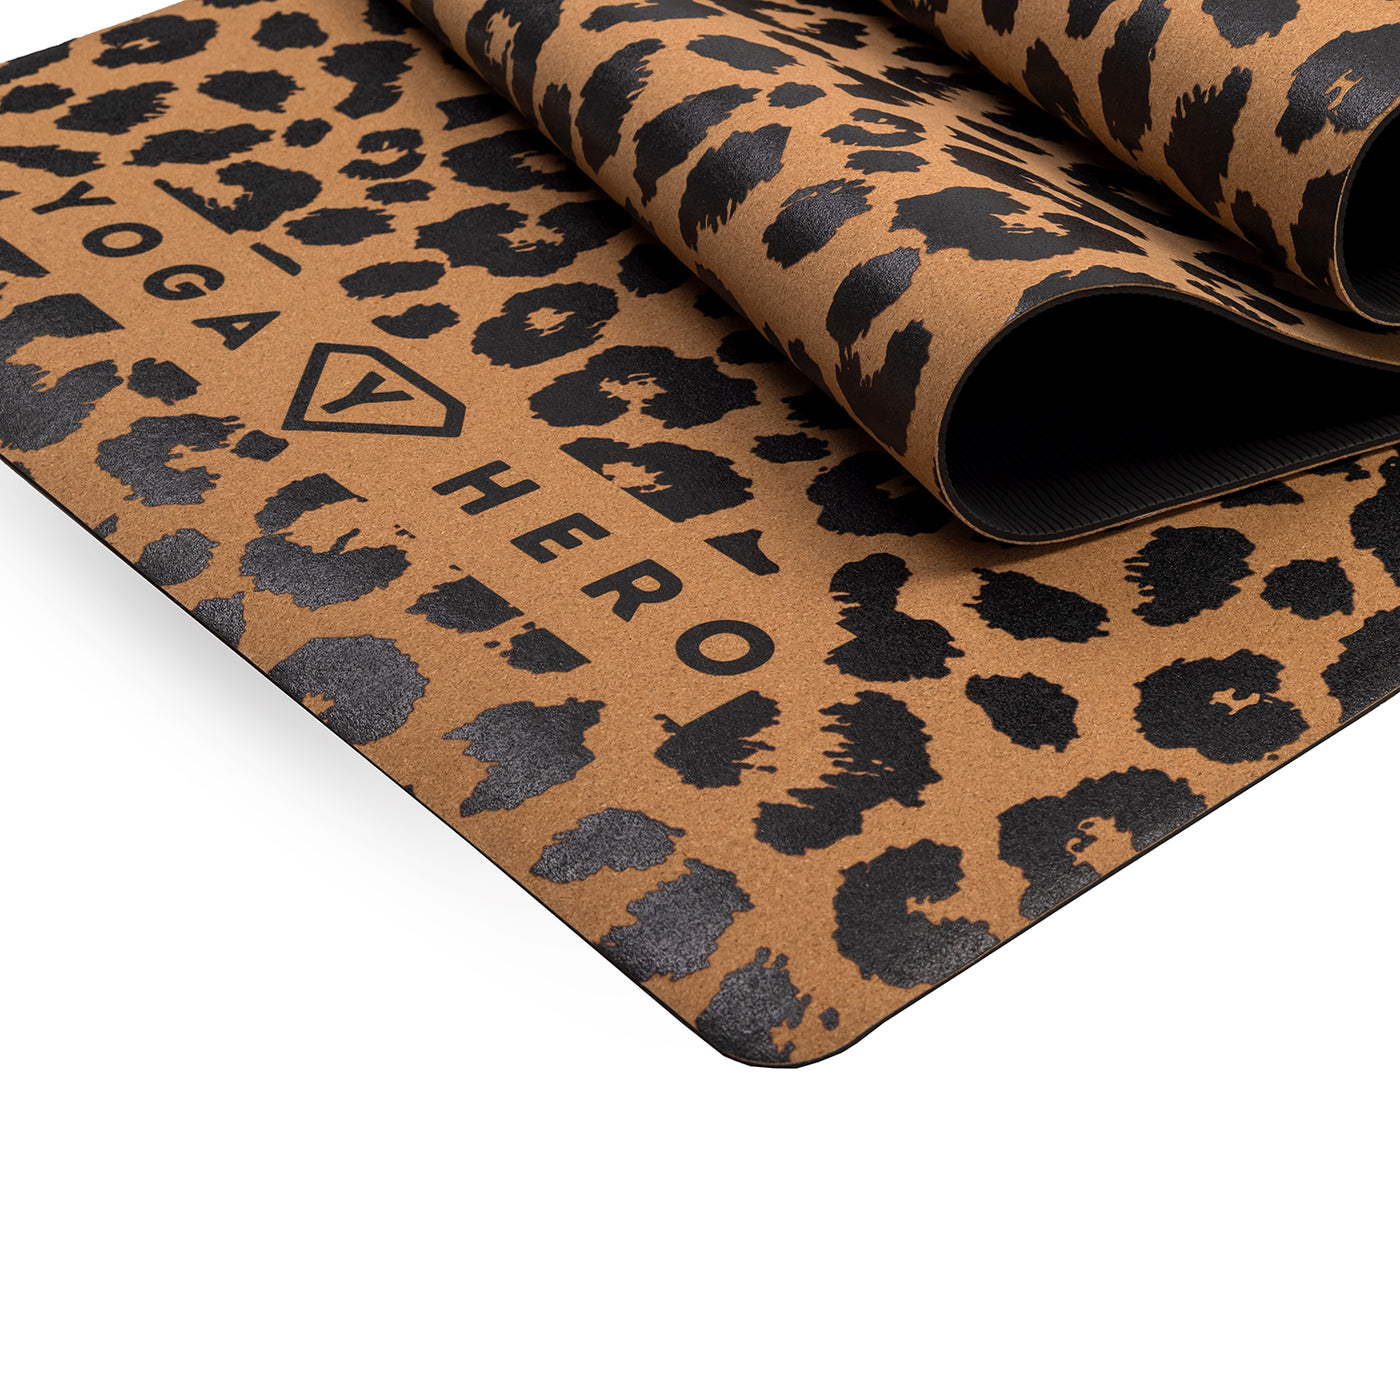 Cork Set Leopard (Cork Mat + 2 Yoga Blocks)